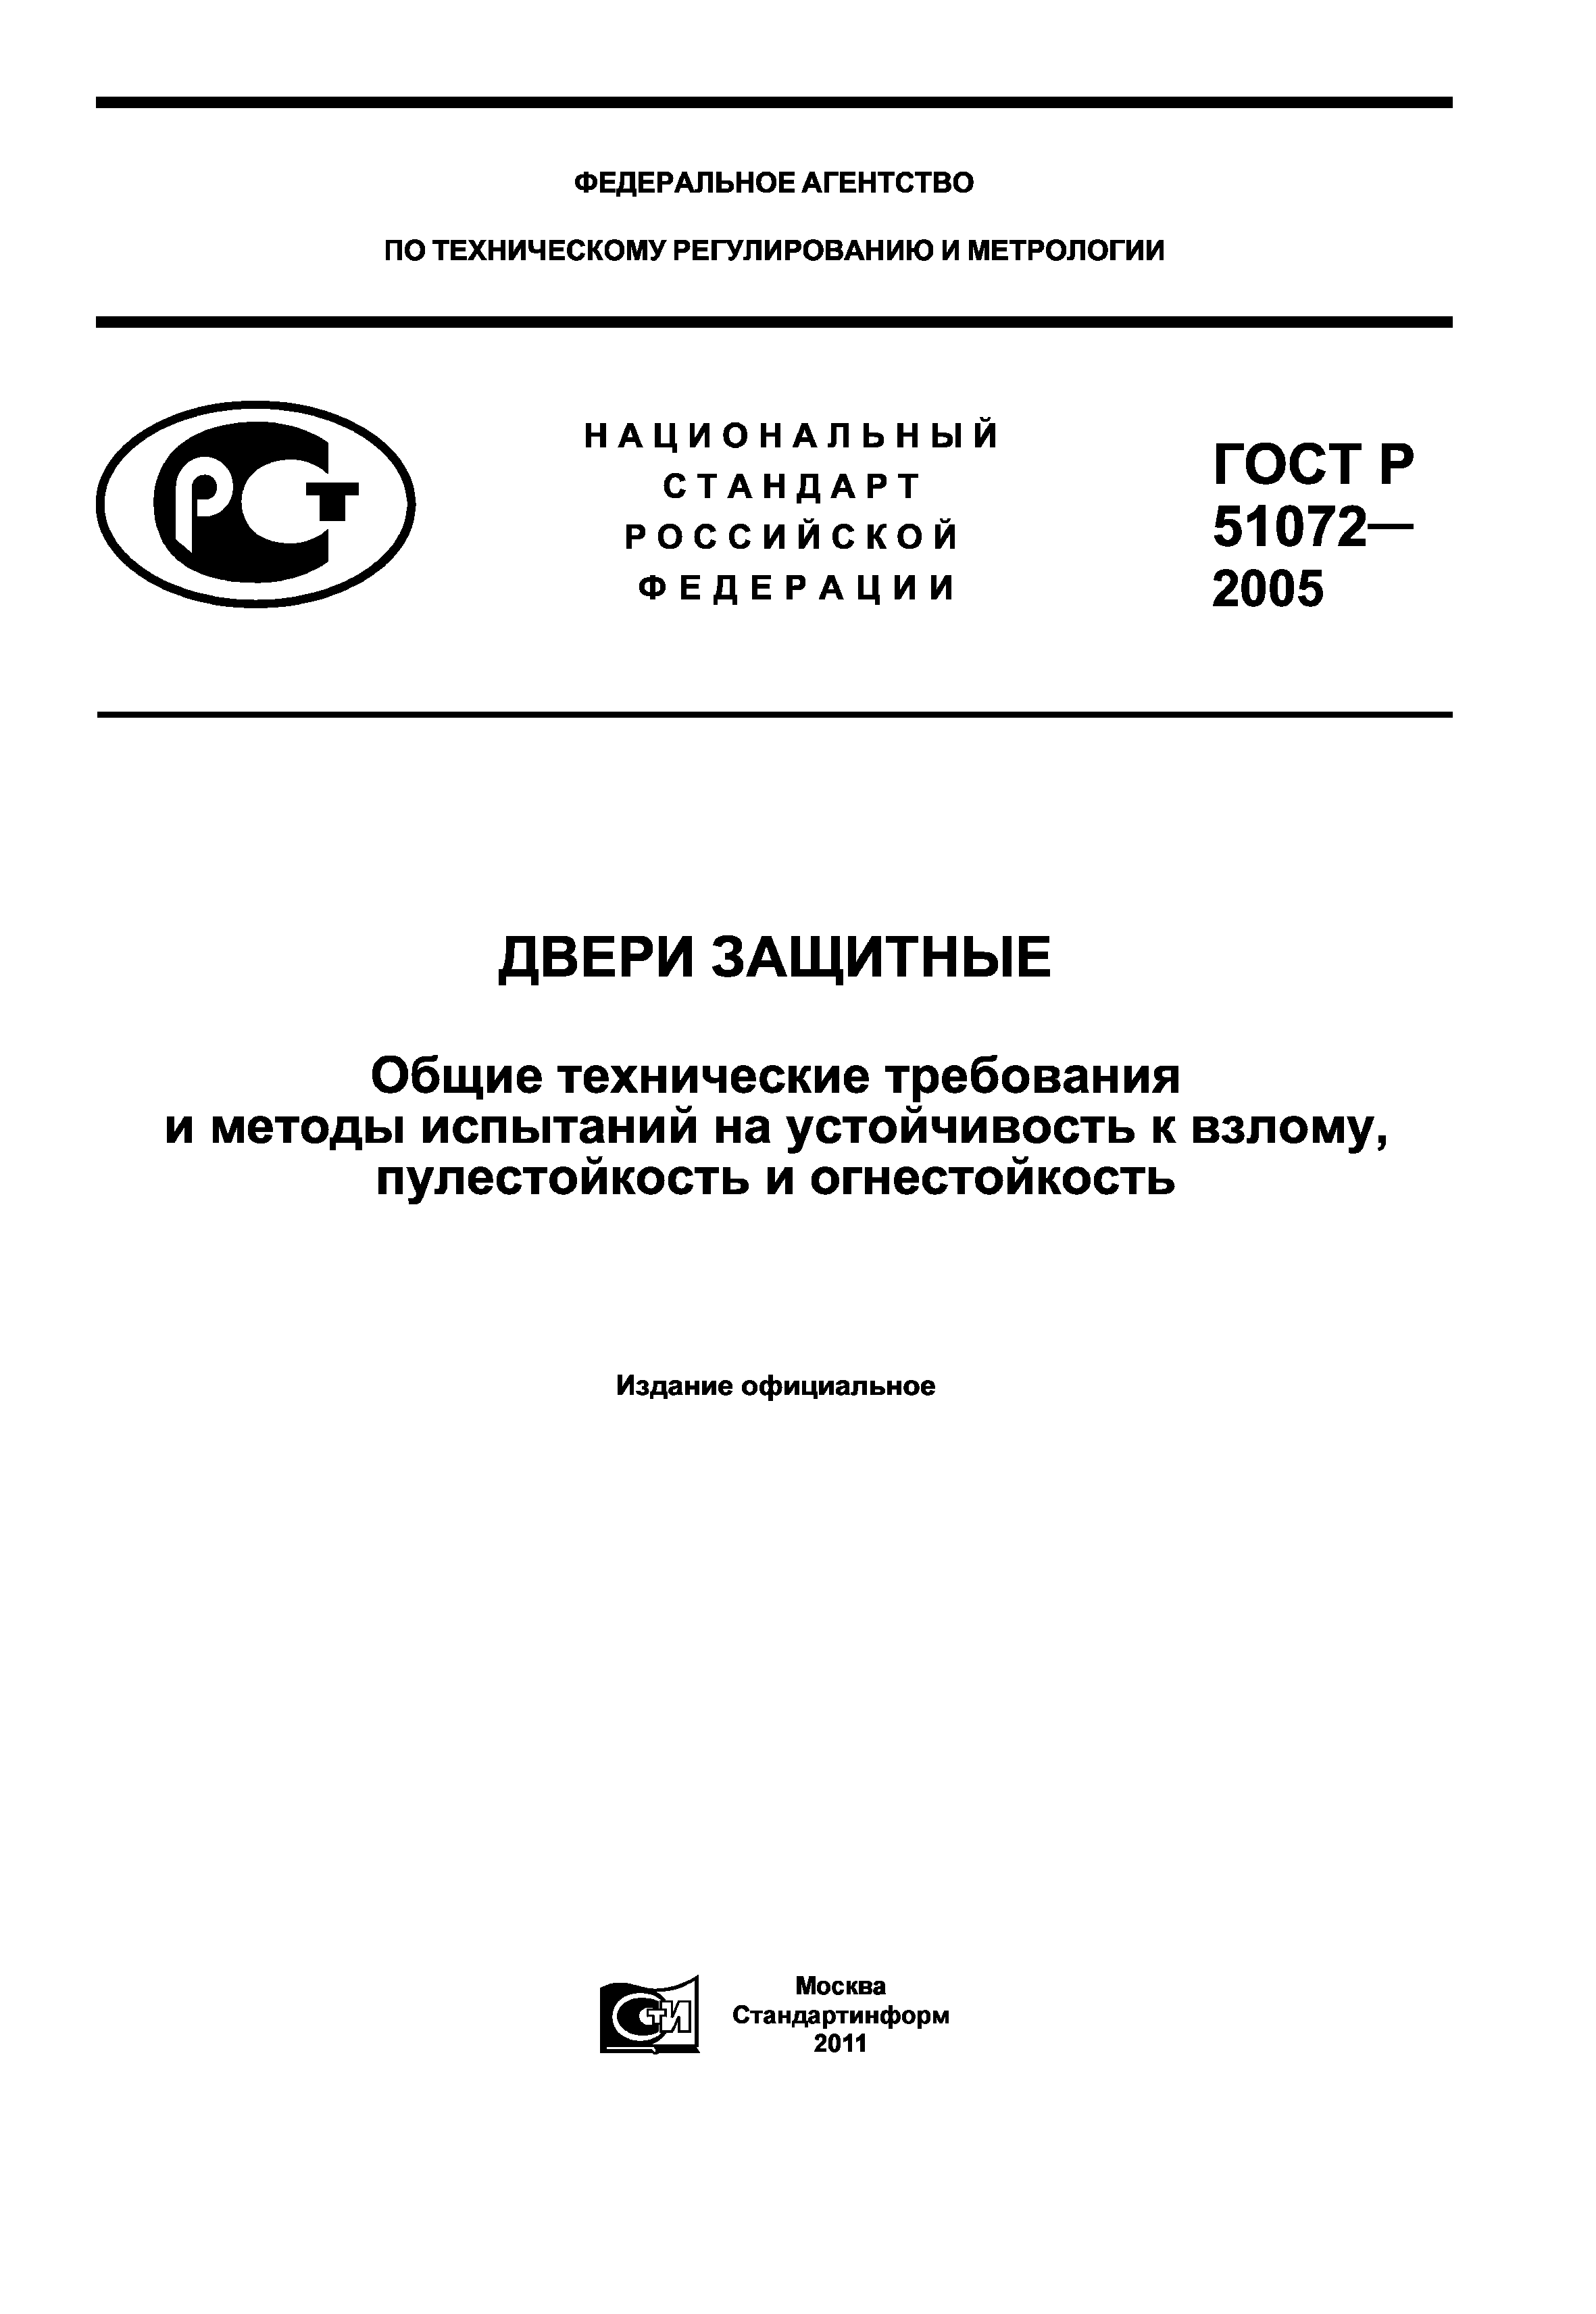 ГОСТ Р 51072-2005